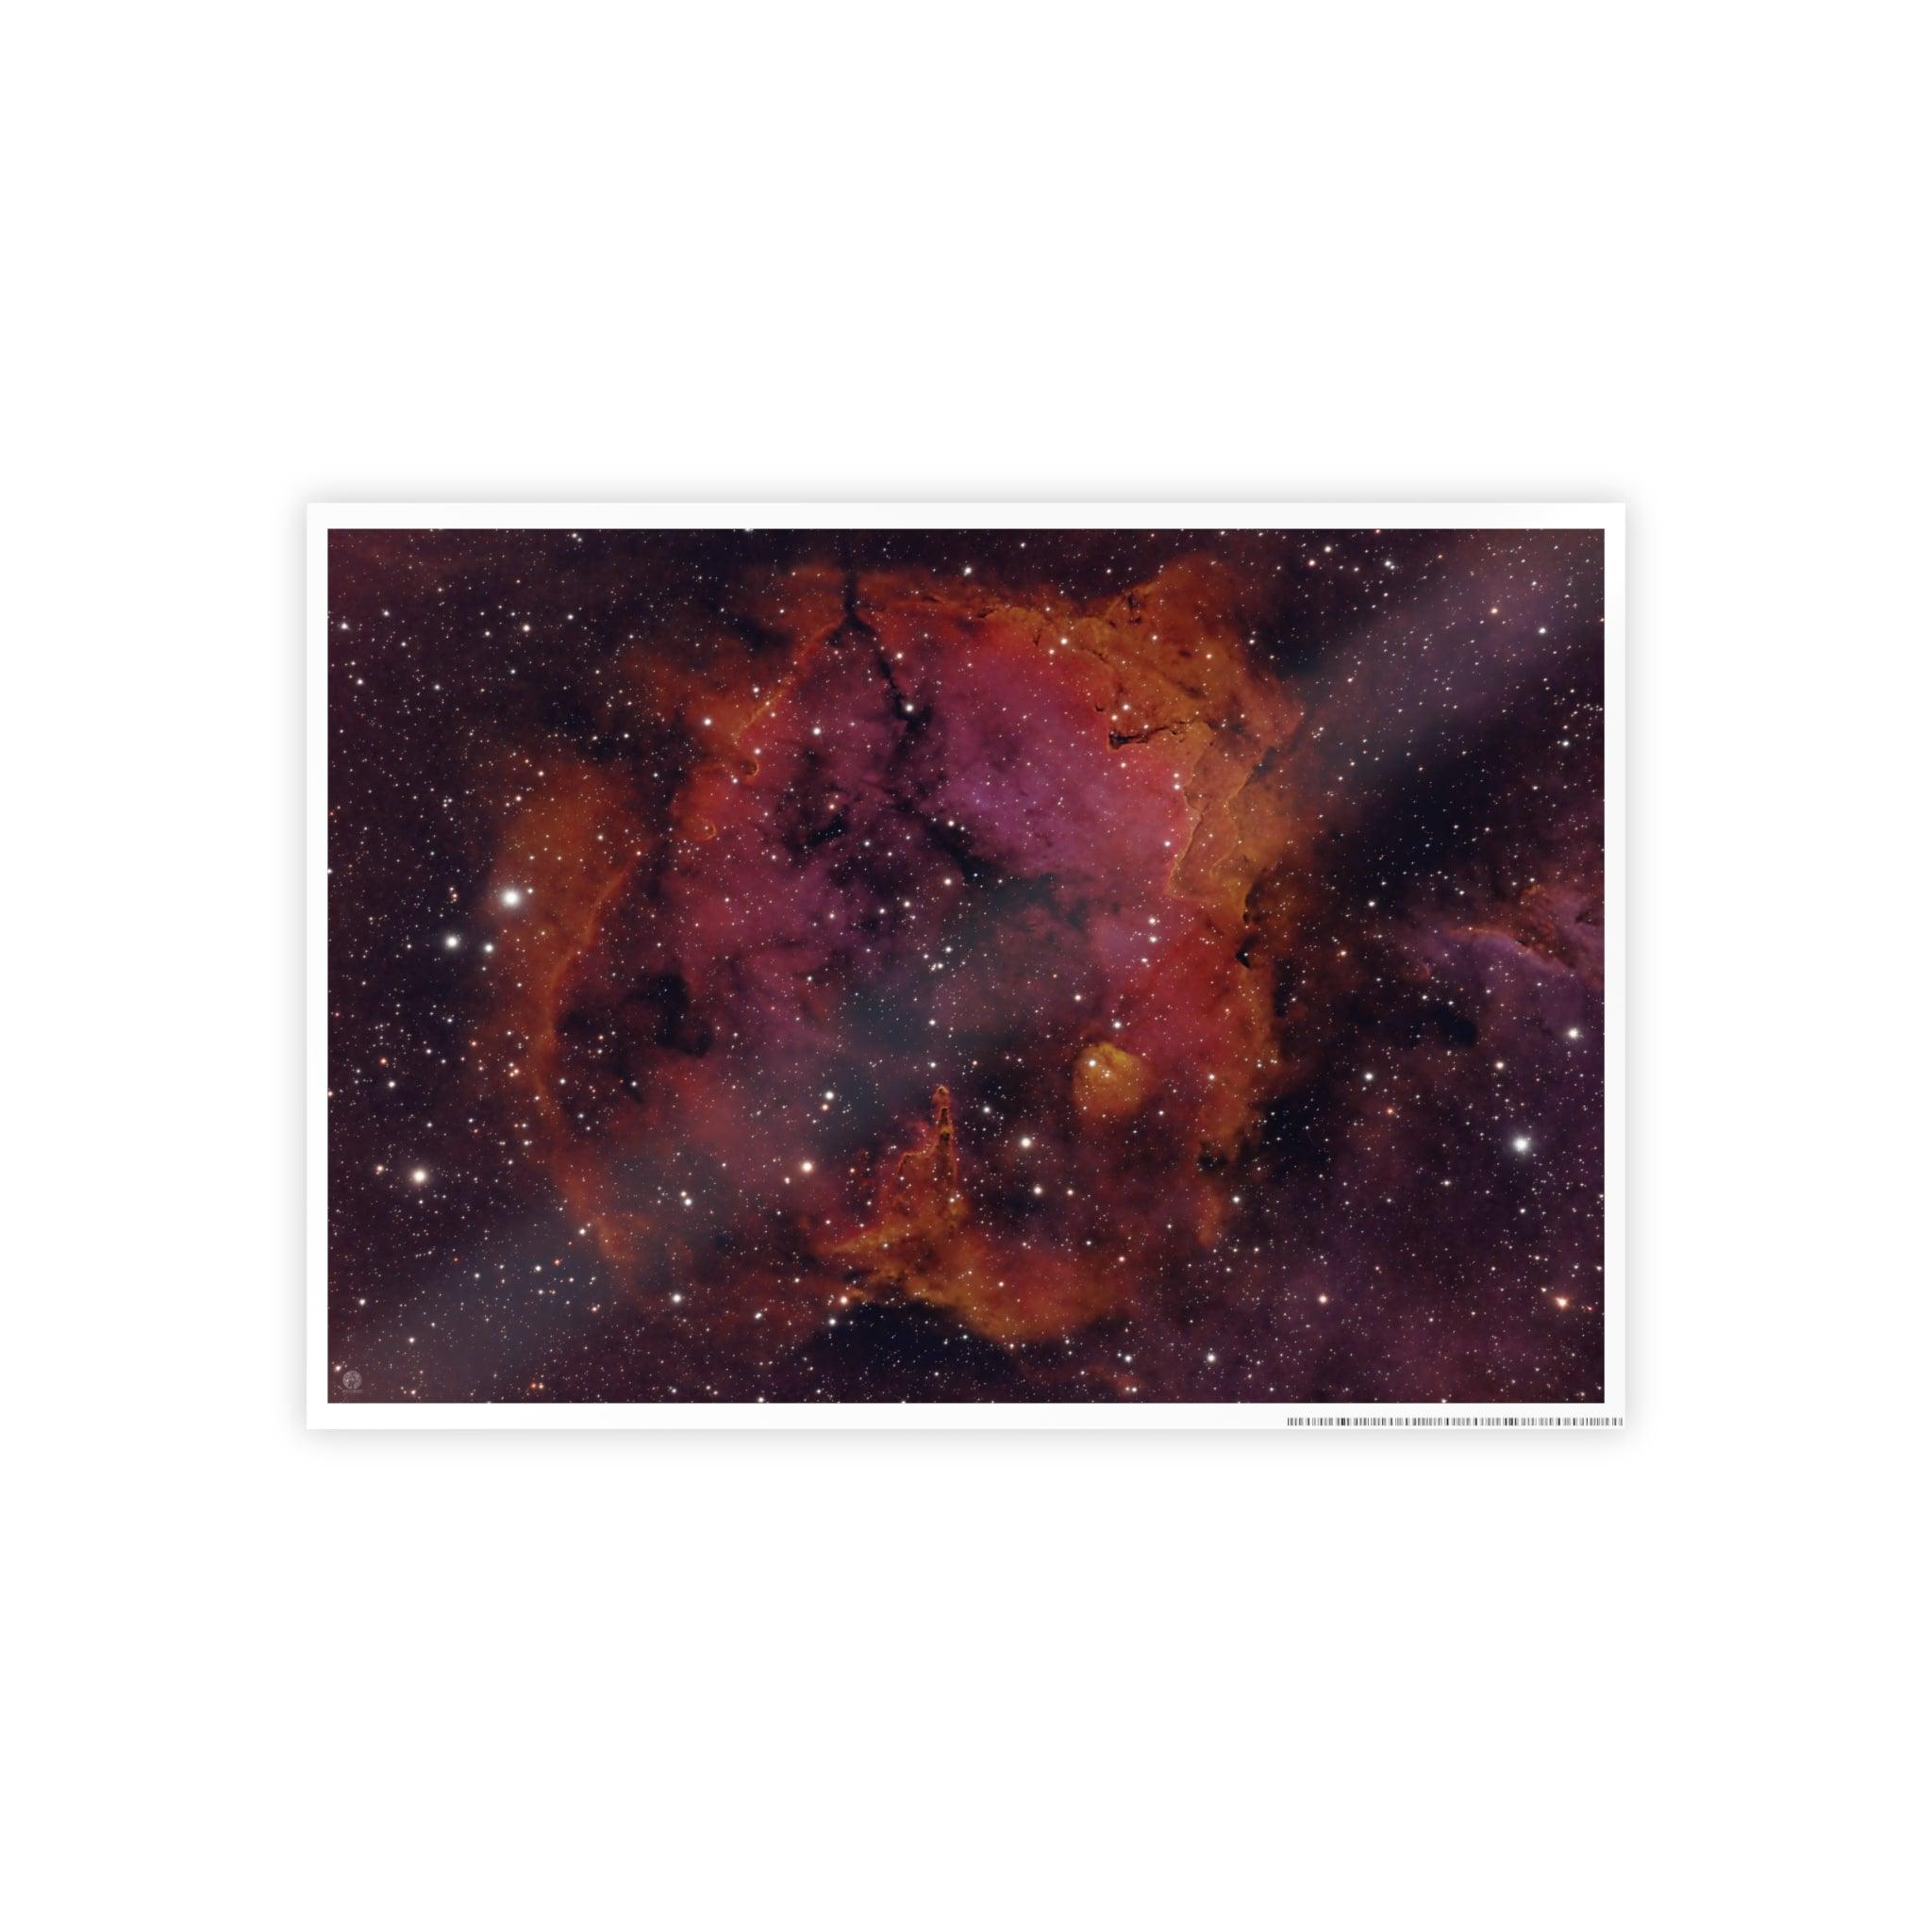 Poster of the Nebula SH2-284